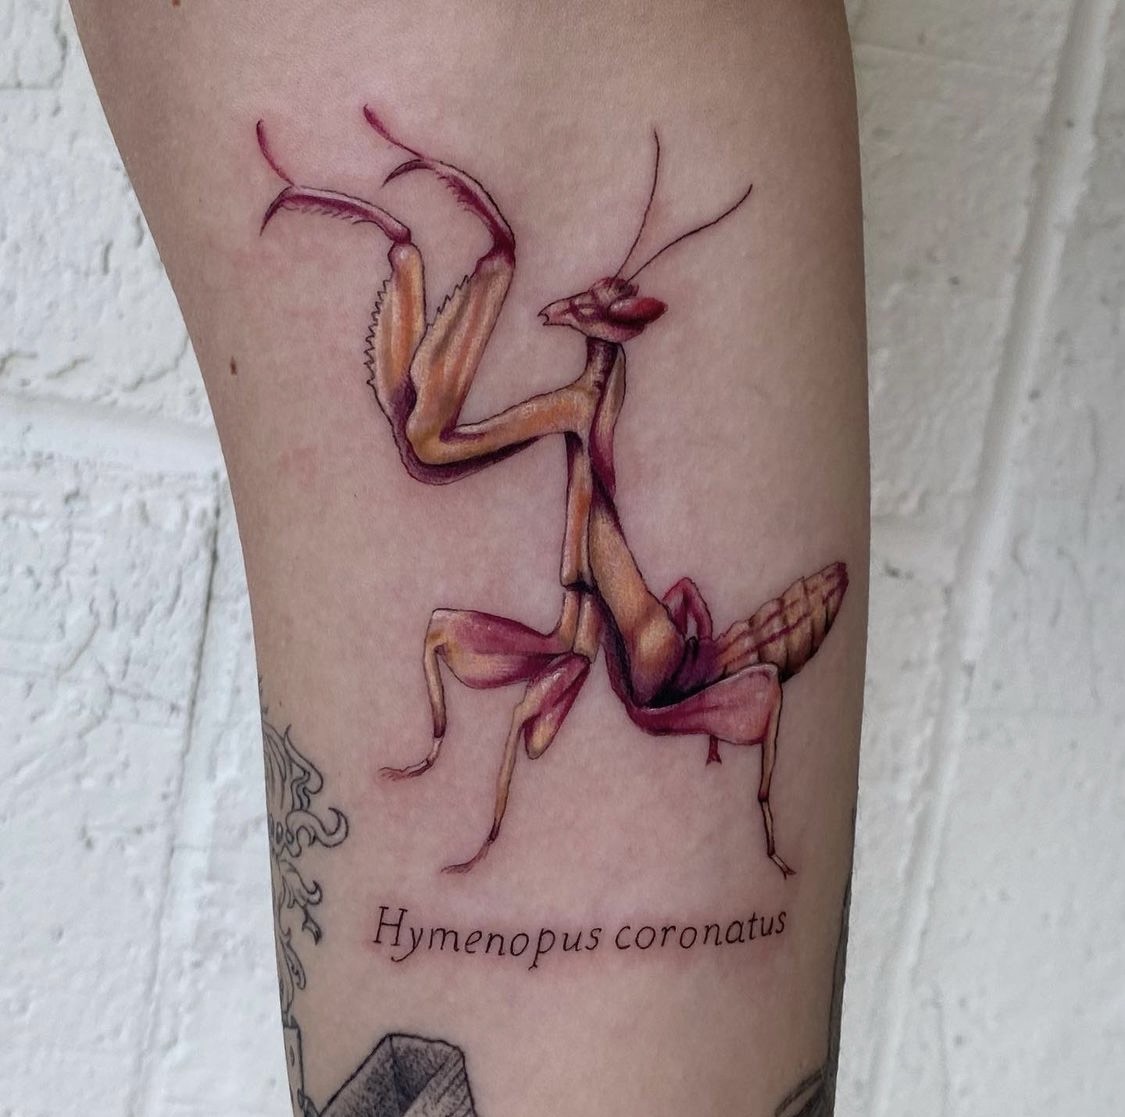 Sacred Mandala Studio tattoo artist - Sarah Cherney - full color tattoo of a preying mantis, Hymenopus coronatus.